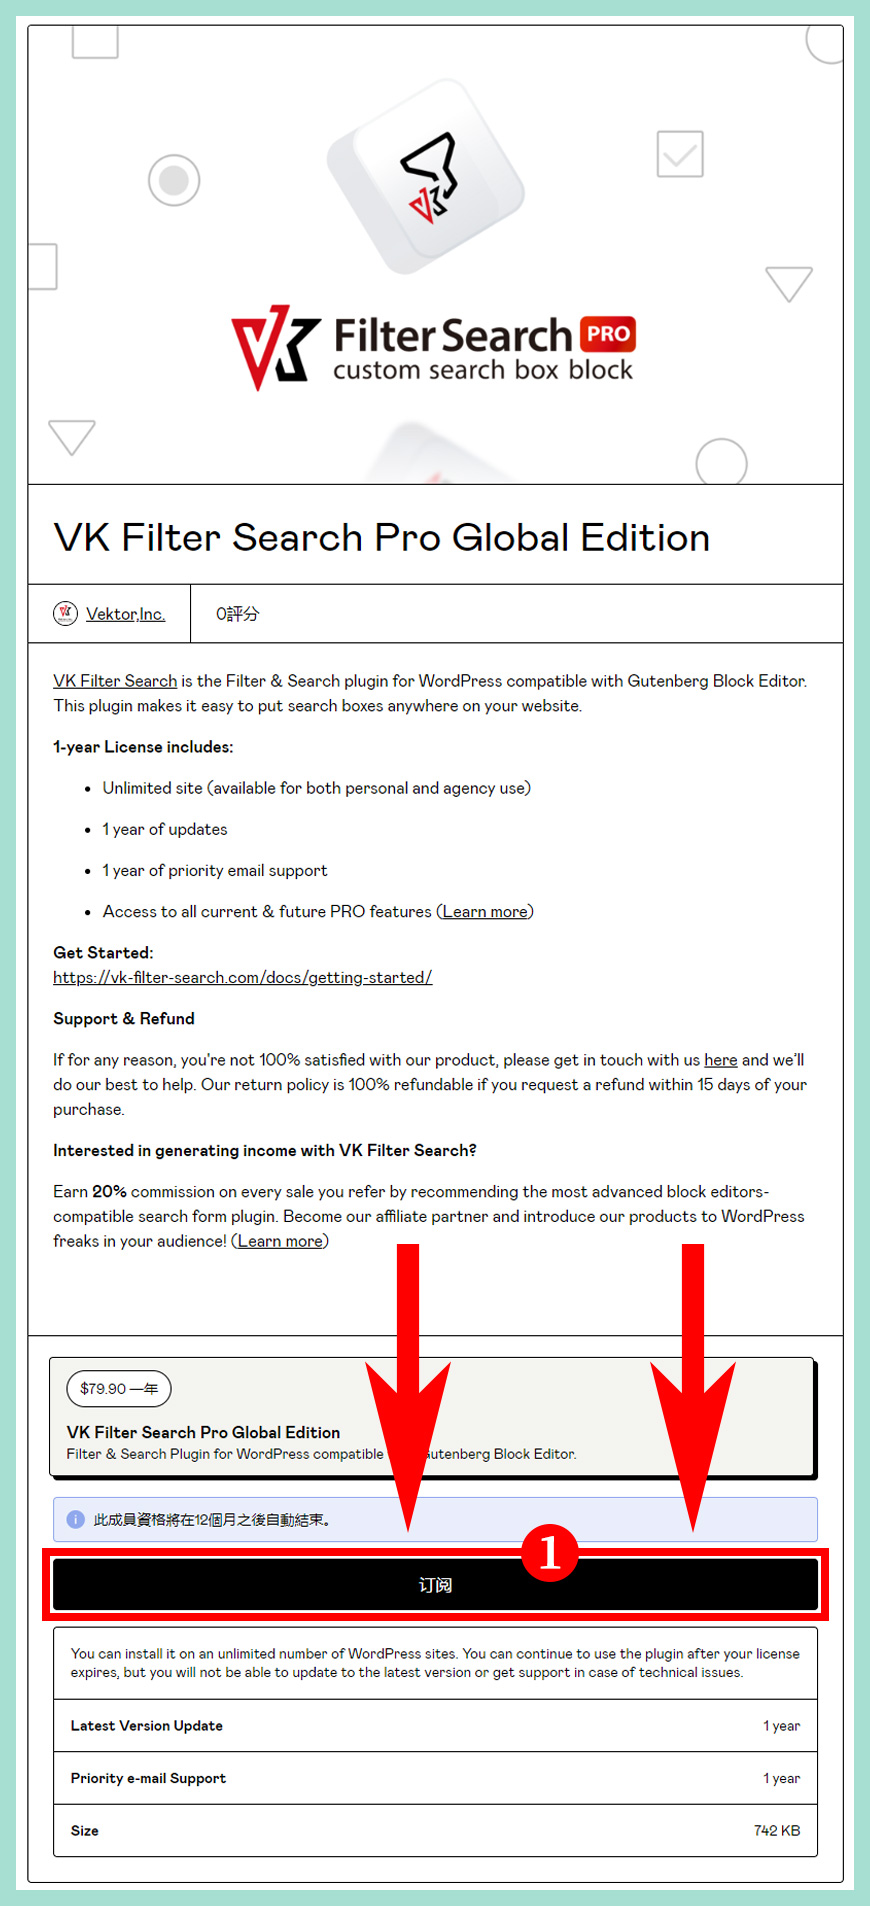 VK Filter Search Pro 價目表 (Price List)